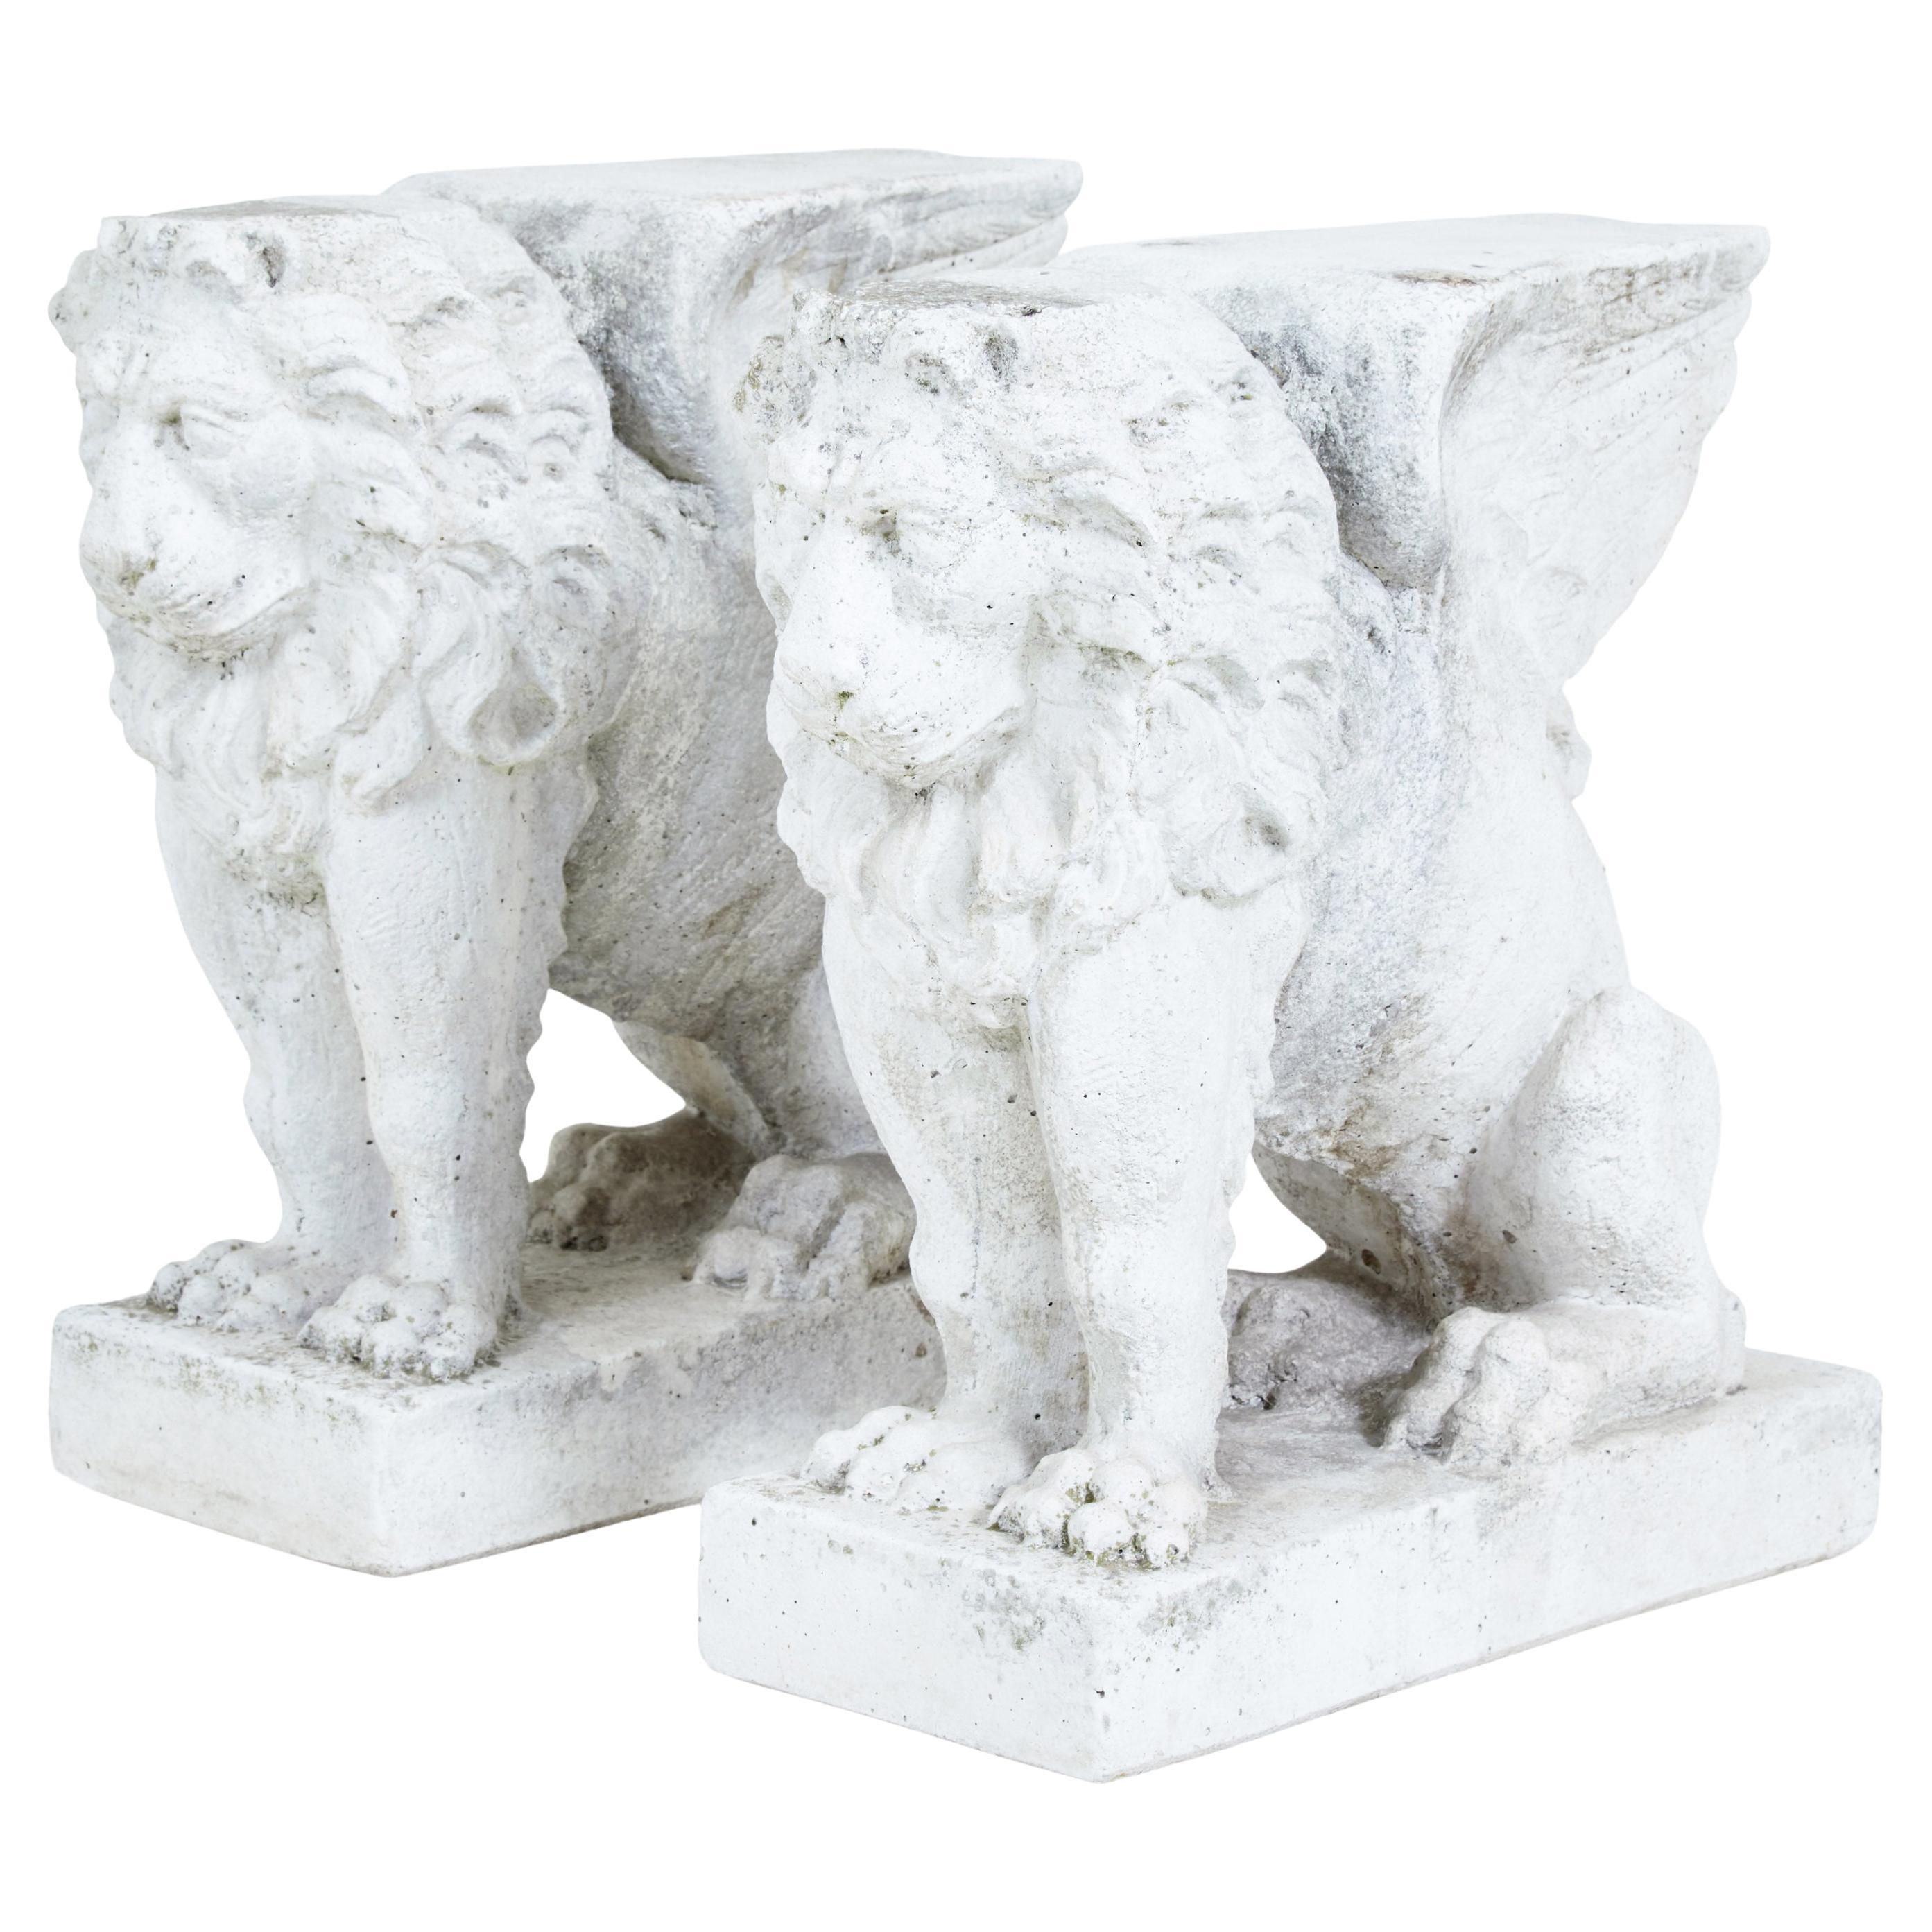 Pair of early 20th century stone garden lion pedestals